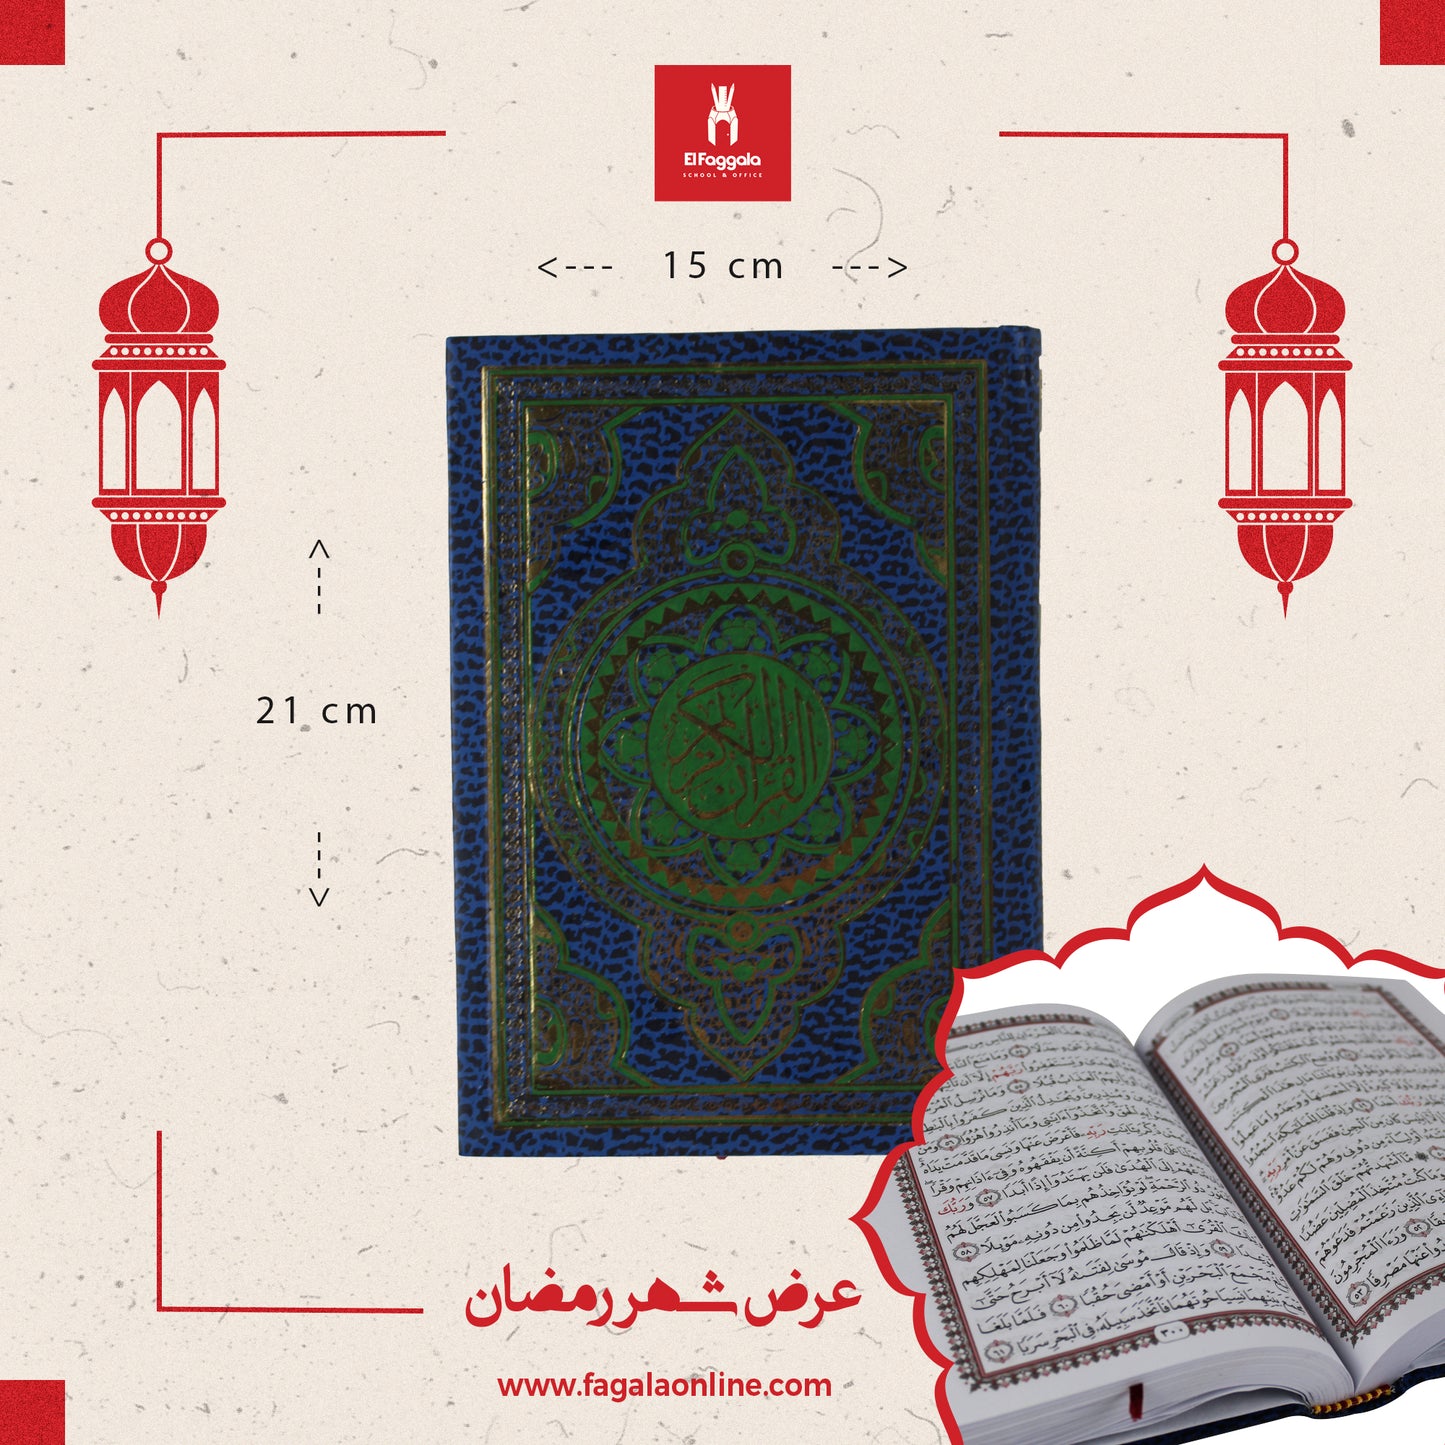 Holy Quran 15cm x 21 cm